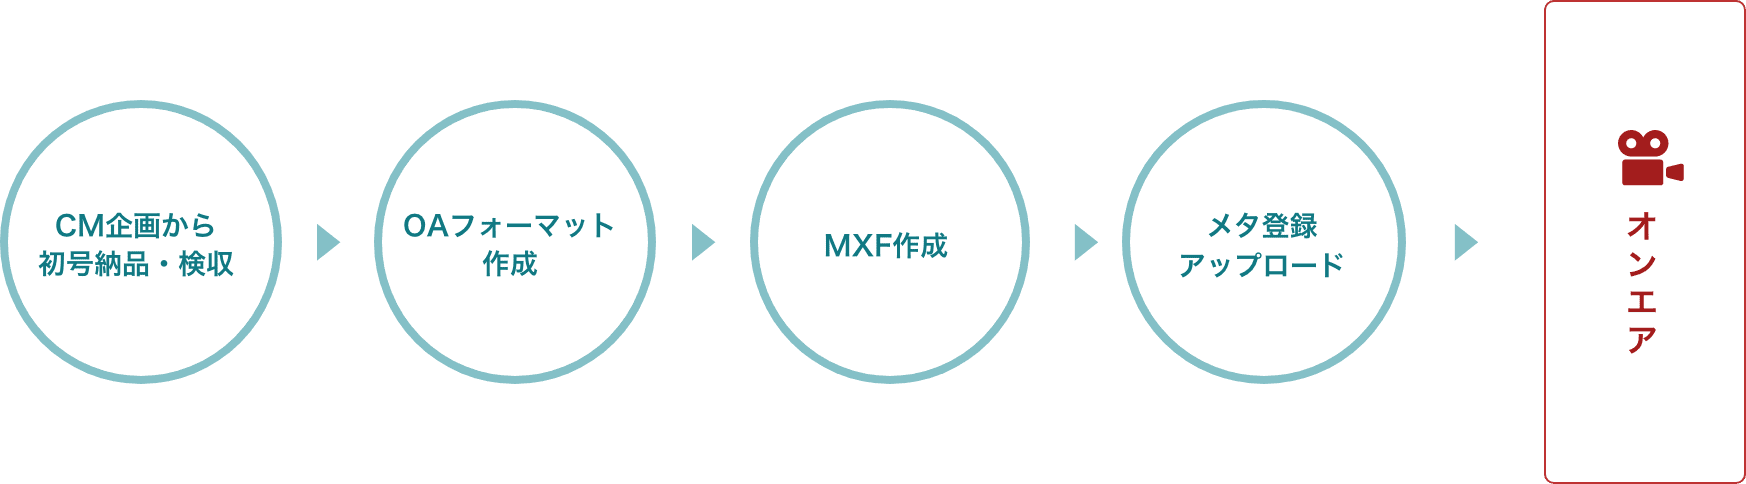 CM企画から初号納品・検収→OAフォーマット作成→MXF作成→メタ登録アップロード→オンエア